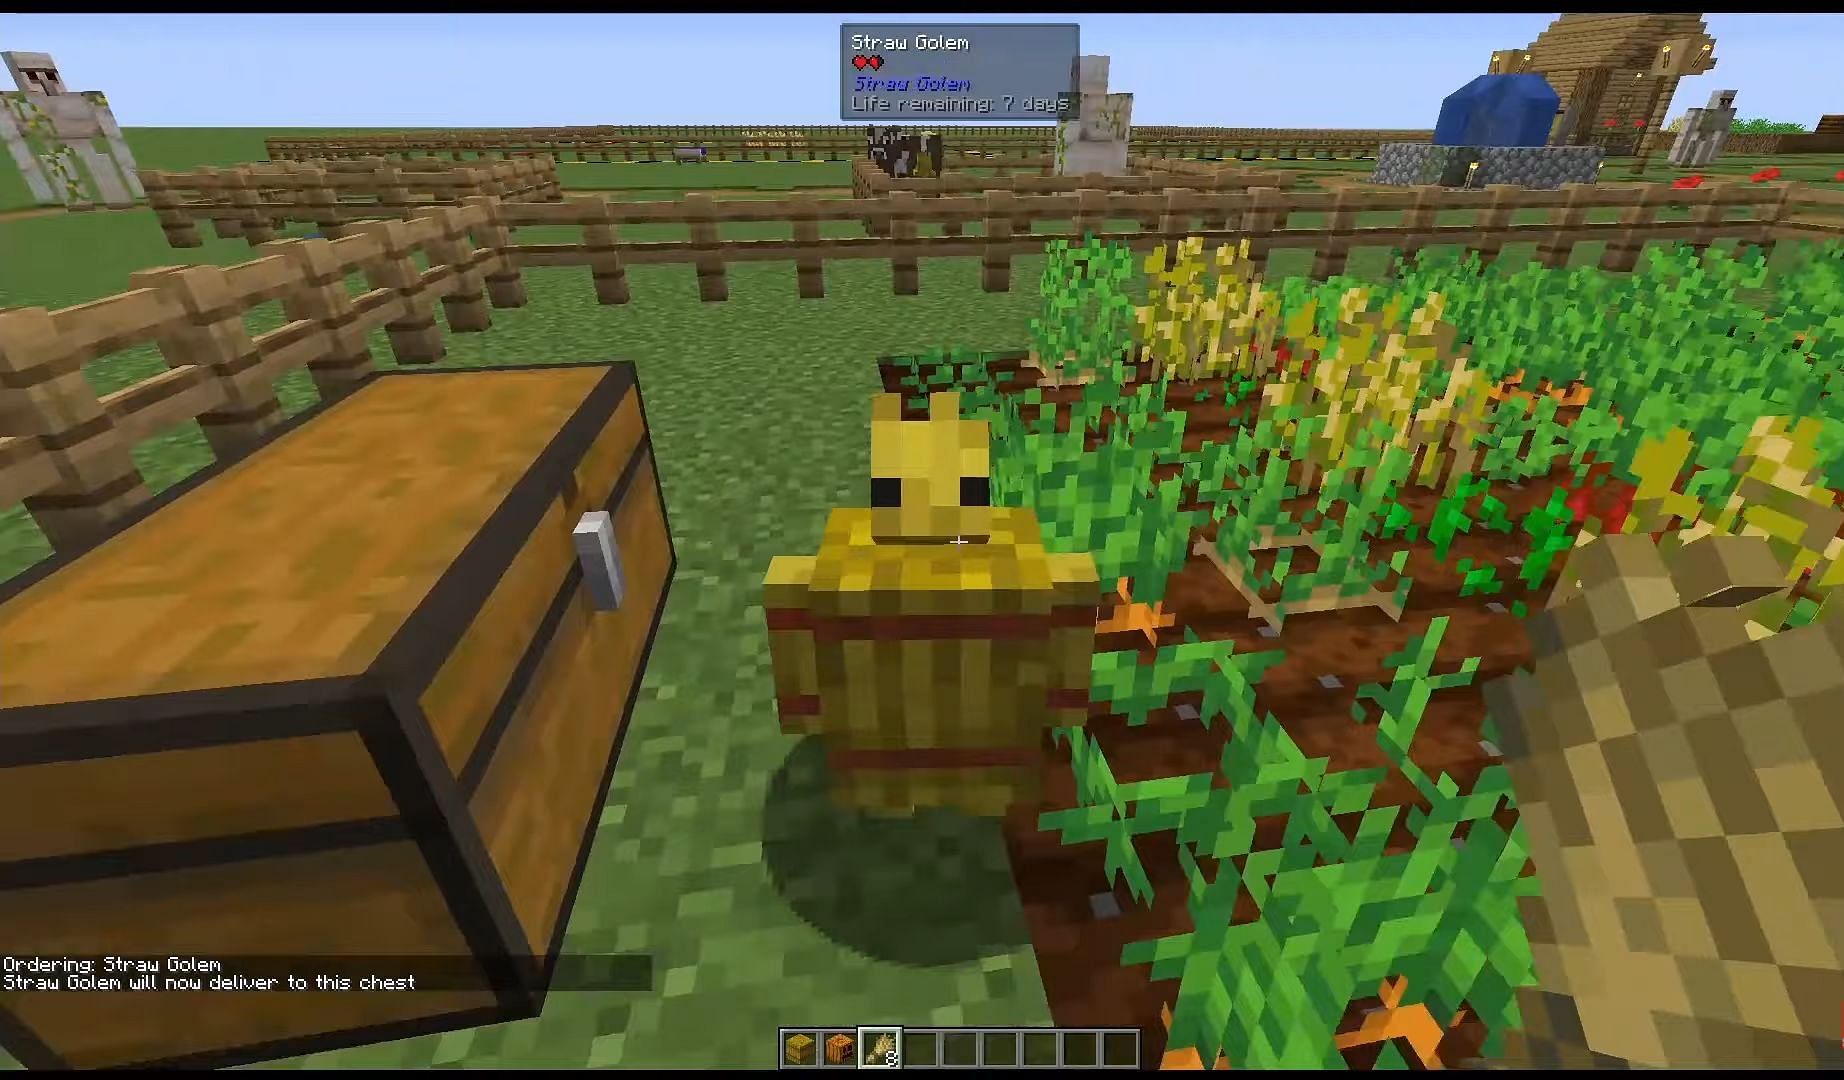 Straw Golem helping players in farming in Minecraft (Image via Ravan_Craft YouTube)